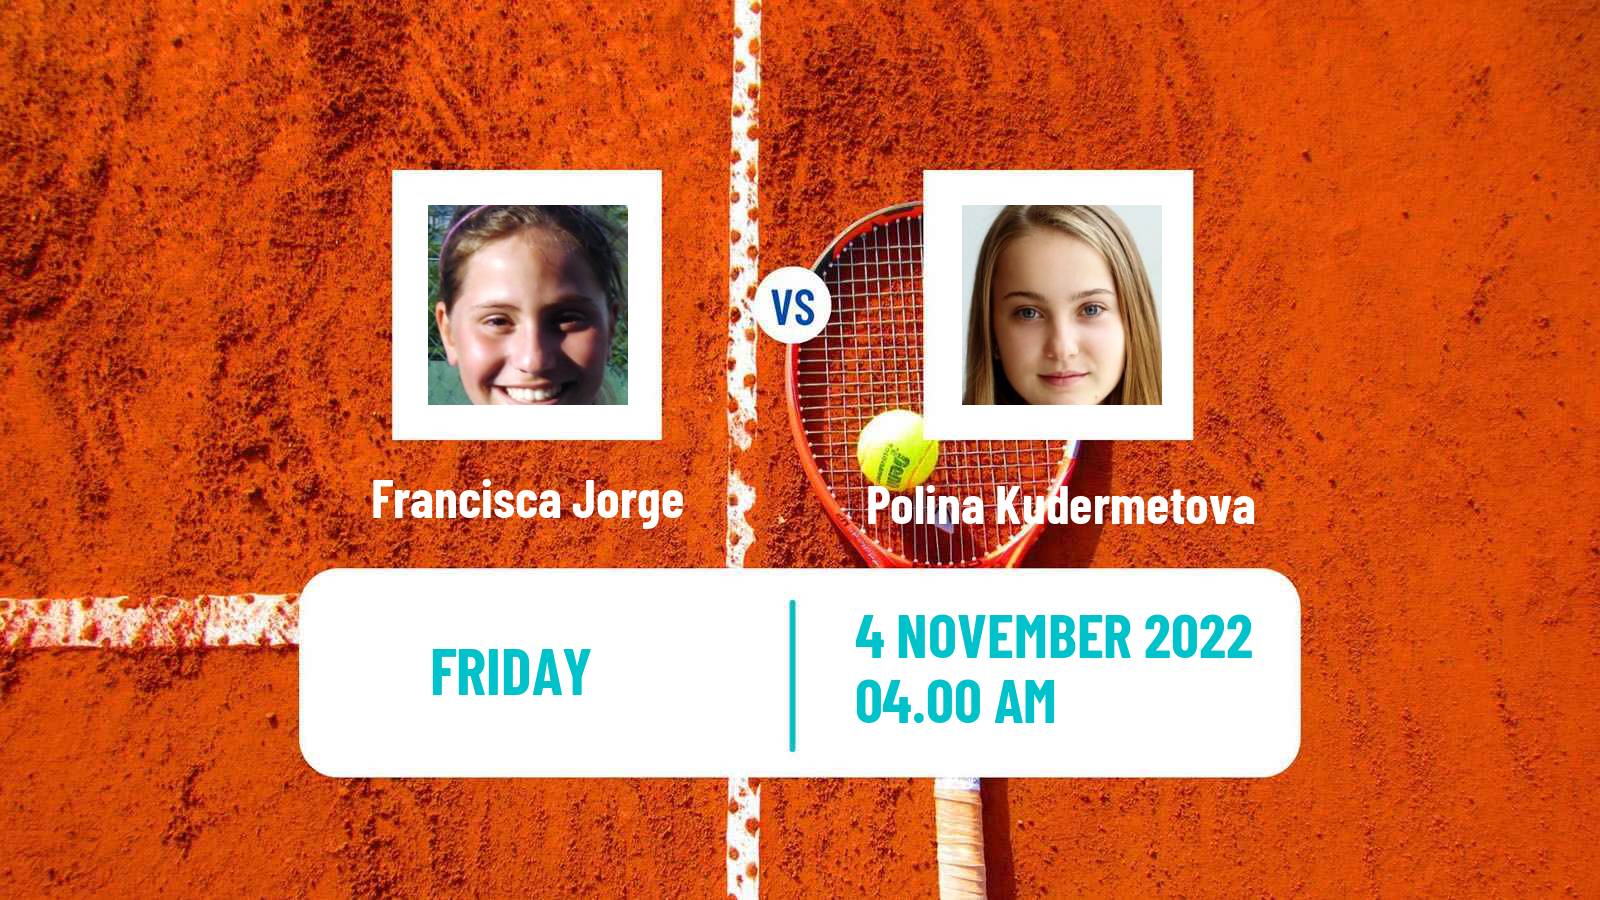 Tennis ITF Tournaments Francisca Jorge - Polina Kudermetova